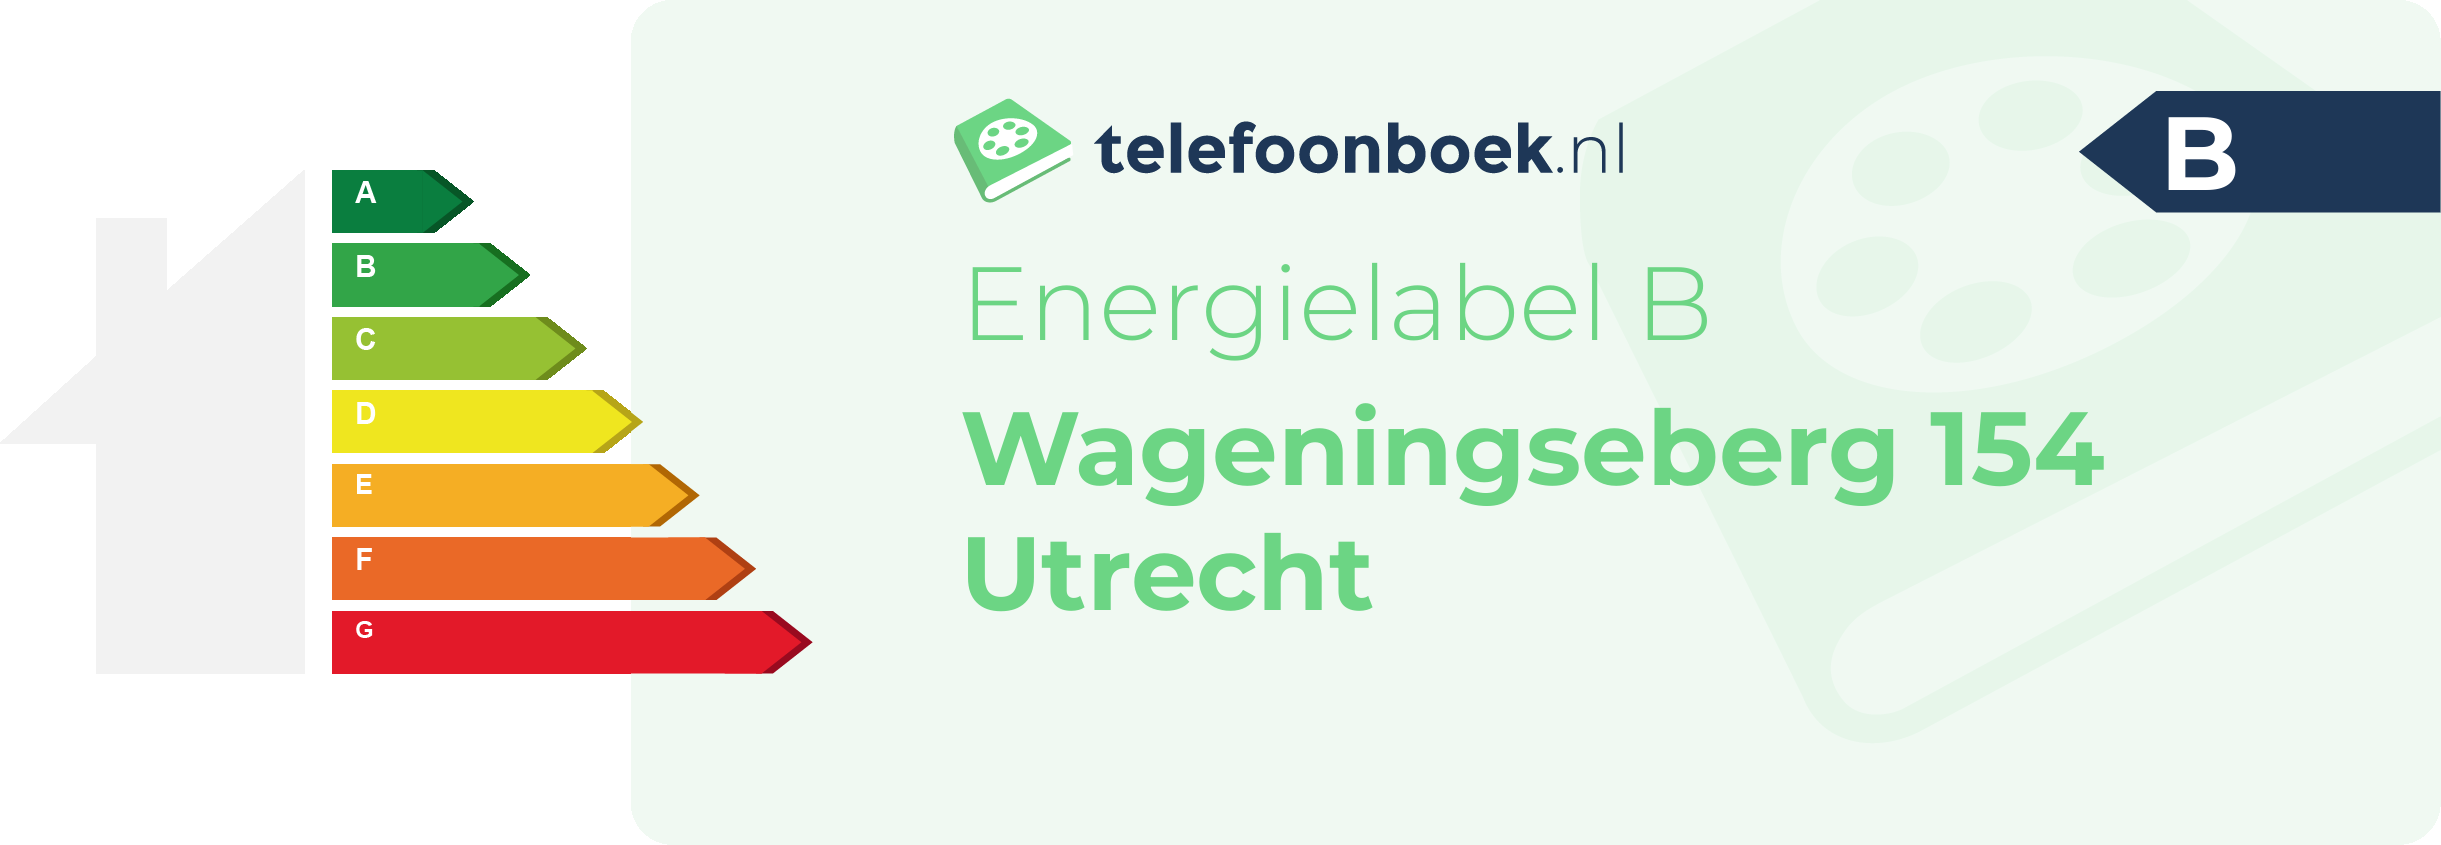 Energielabel Wageningseberg 154 Utrecht